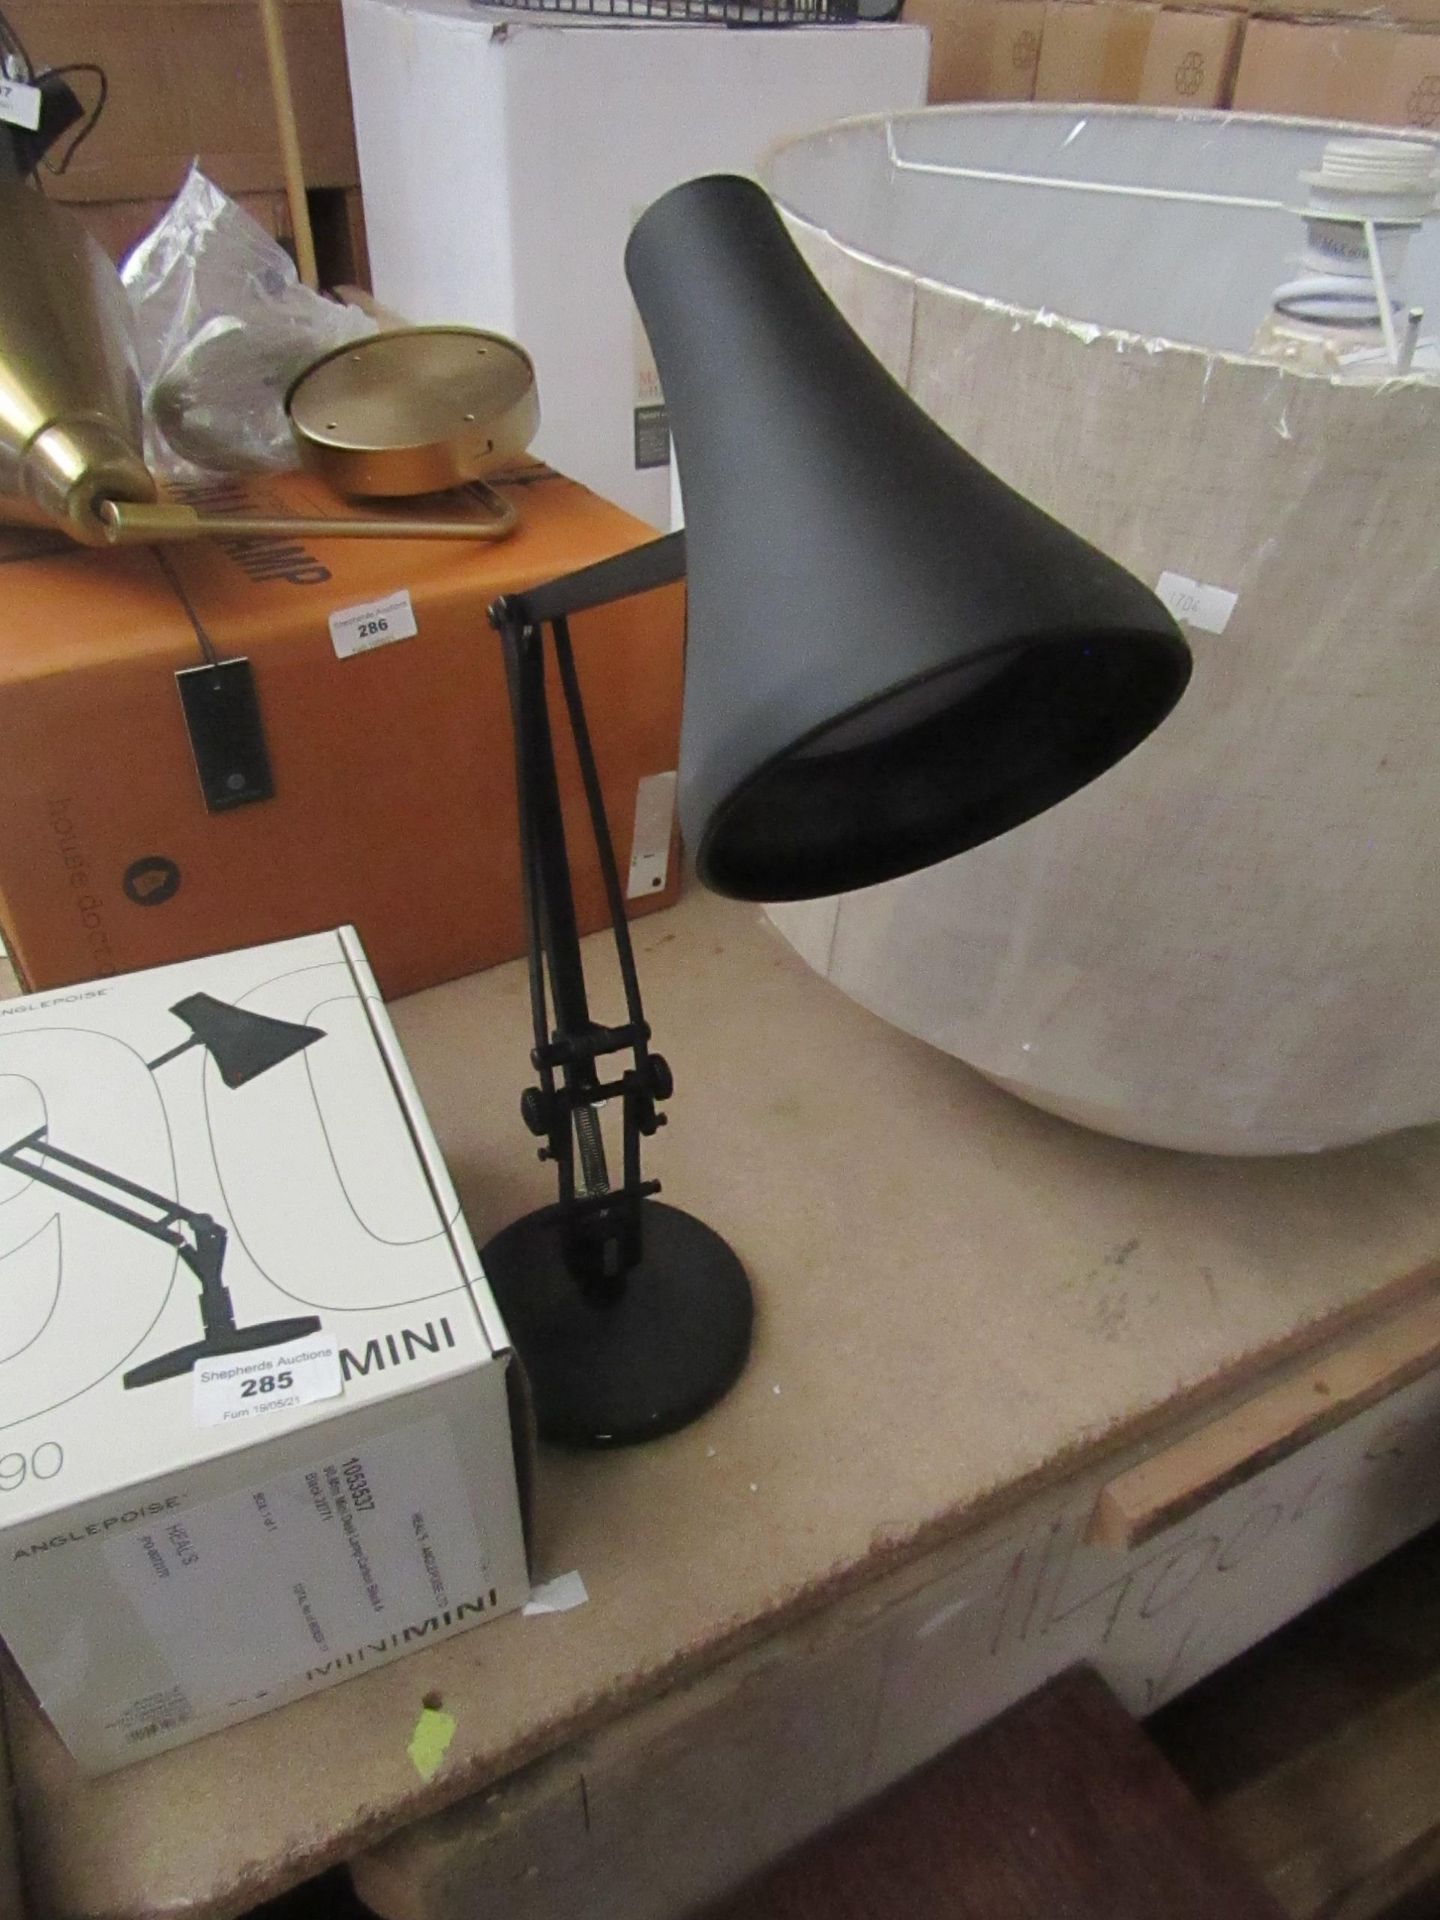 | 1X | HEELS 90 MINI DESK LAMP IN CARBON BLACK | NO VISIBLE MAJOR DAMAGE RRP £99 |